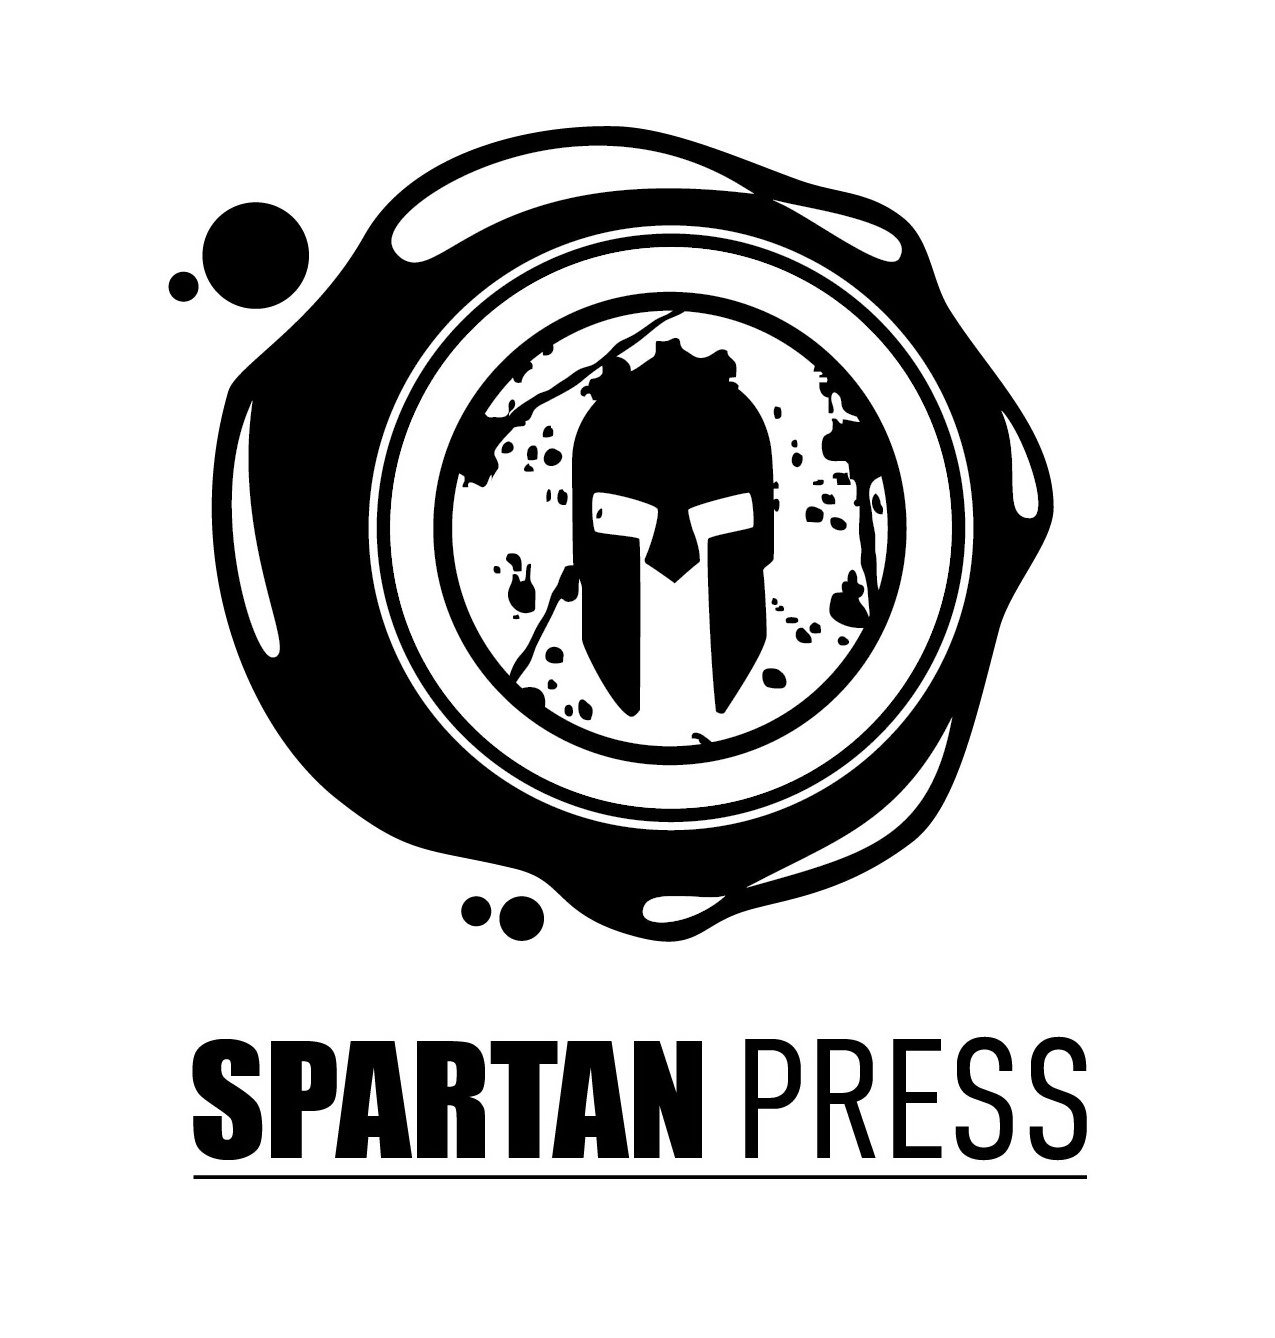  SPARTAN PRESS